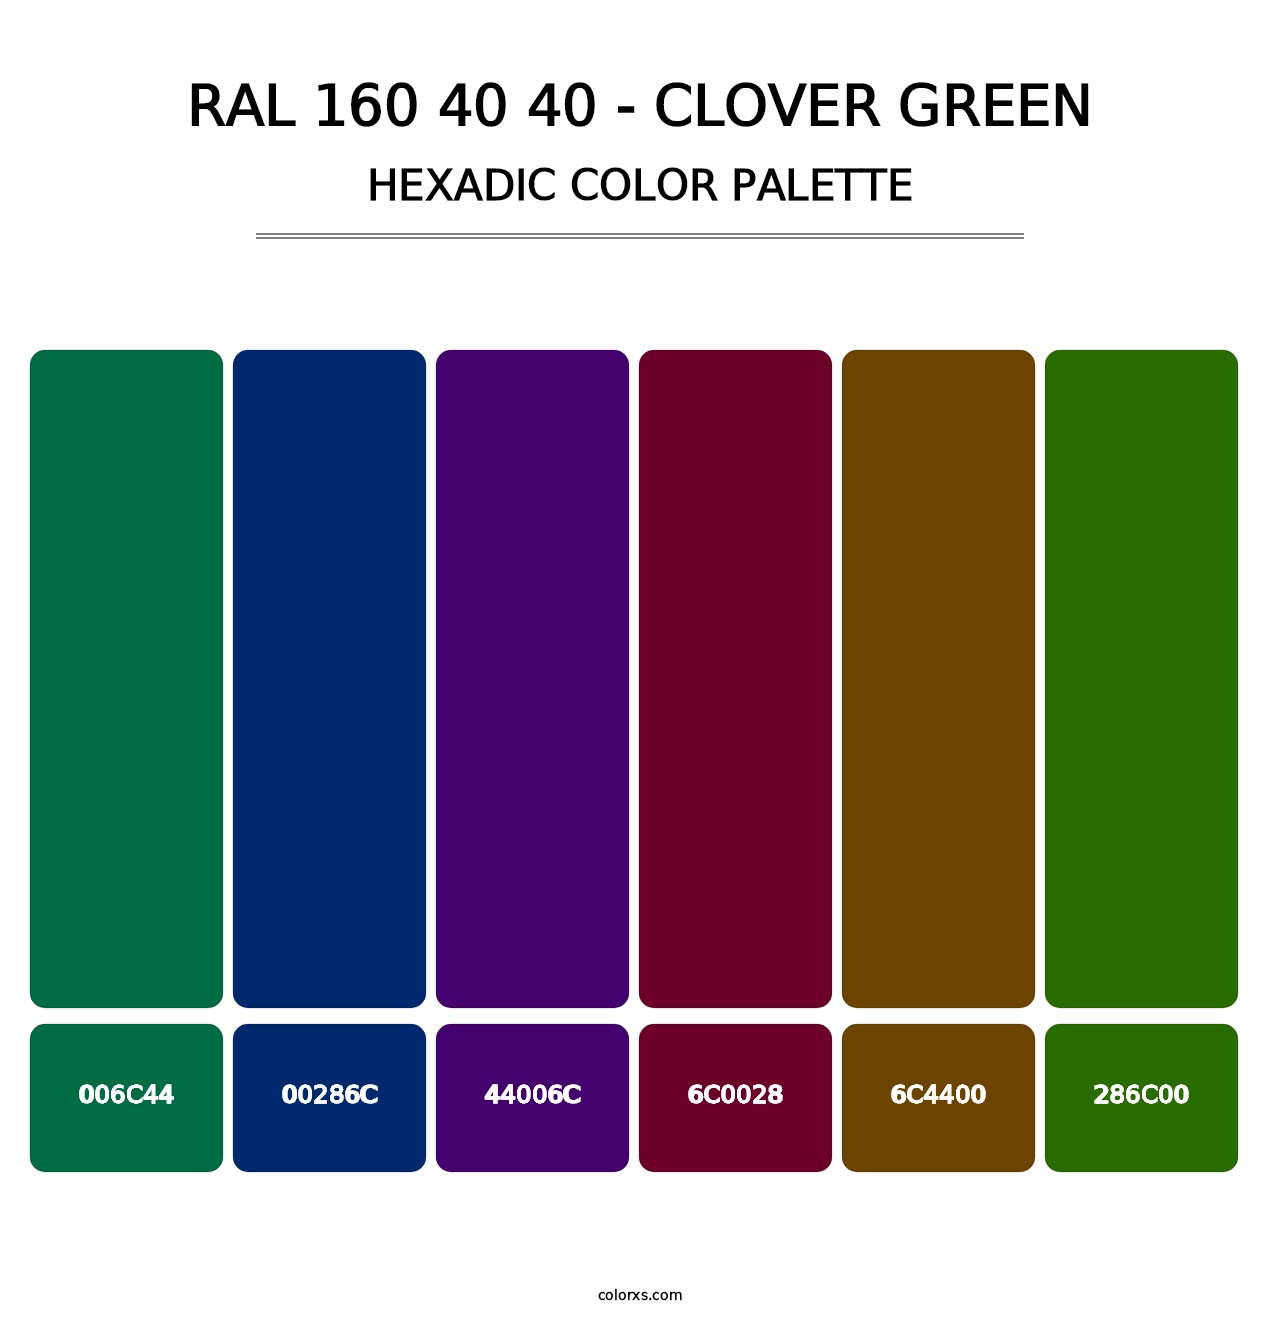 RAL 160 40 40 - Clover Green - Hexadic Color Palette